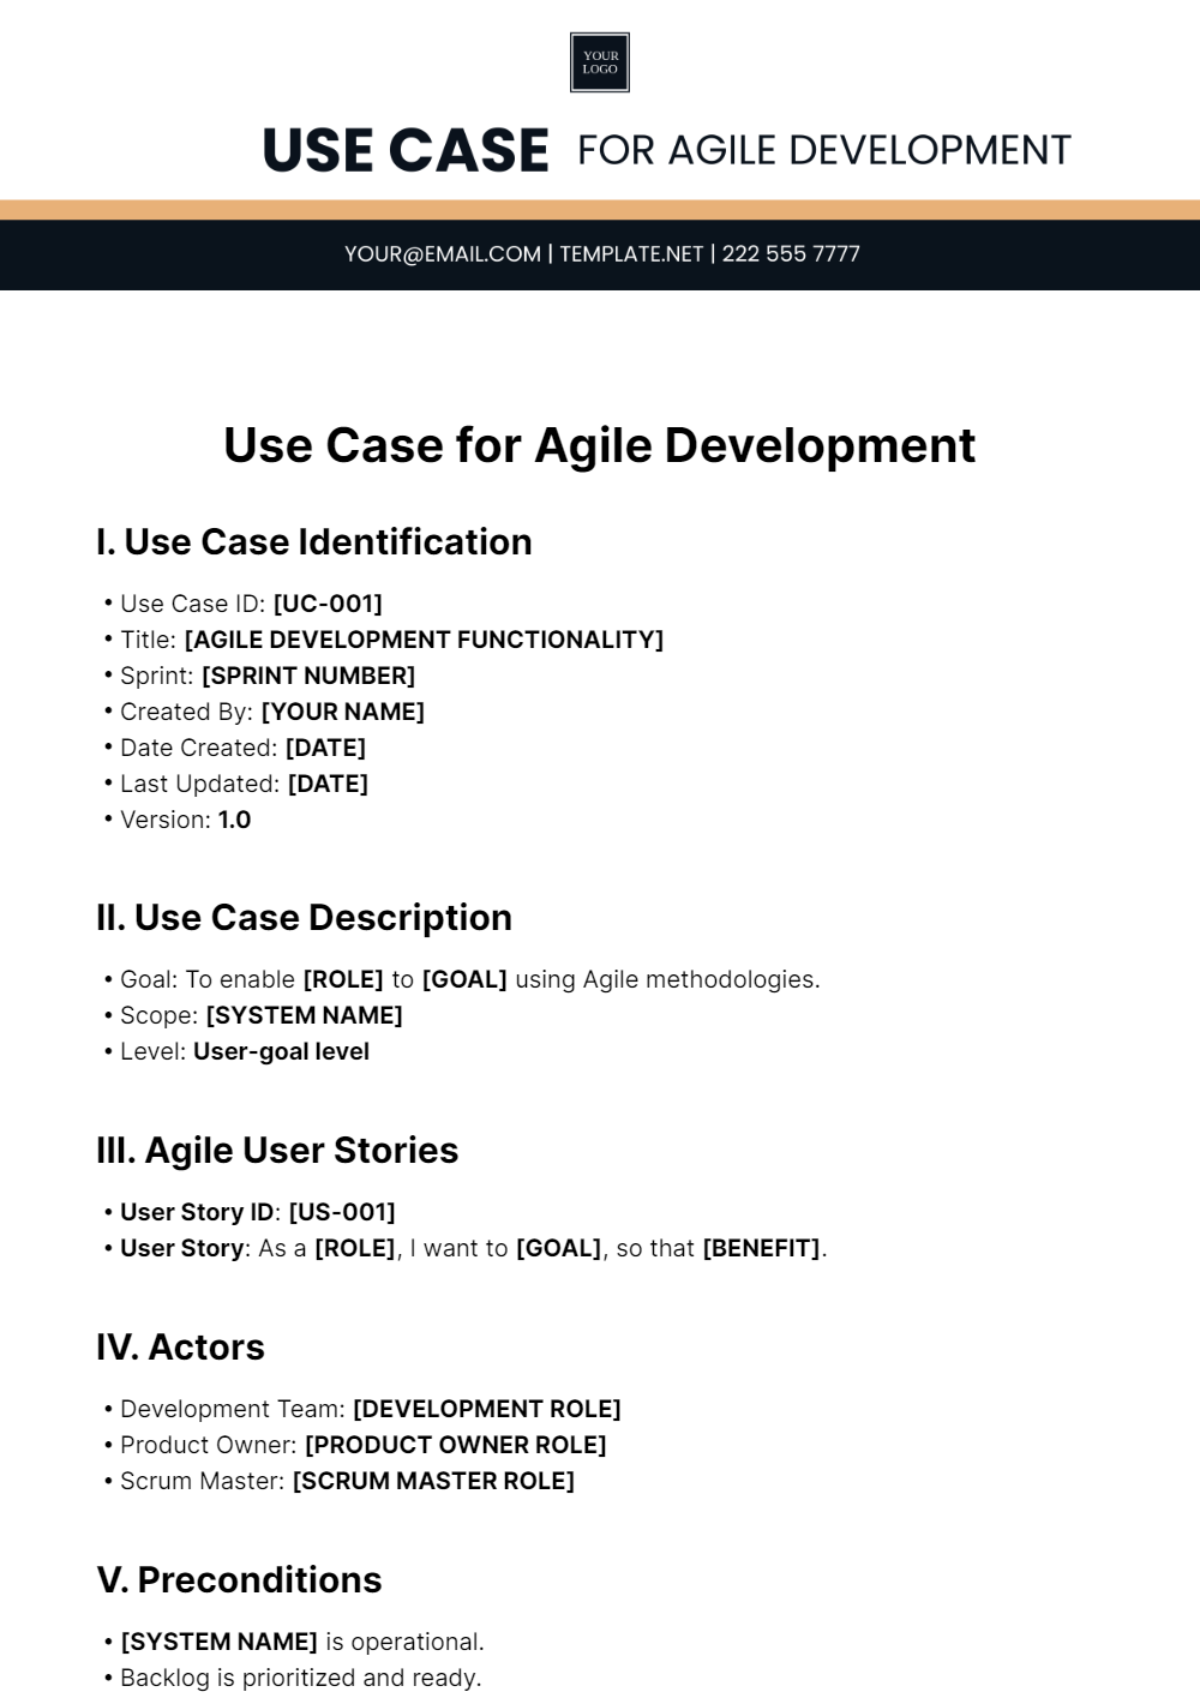 Use Case for Agile Development Template